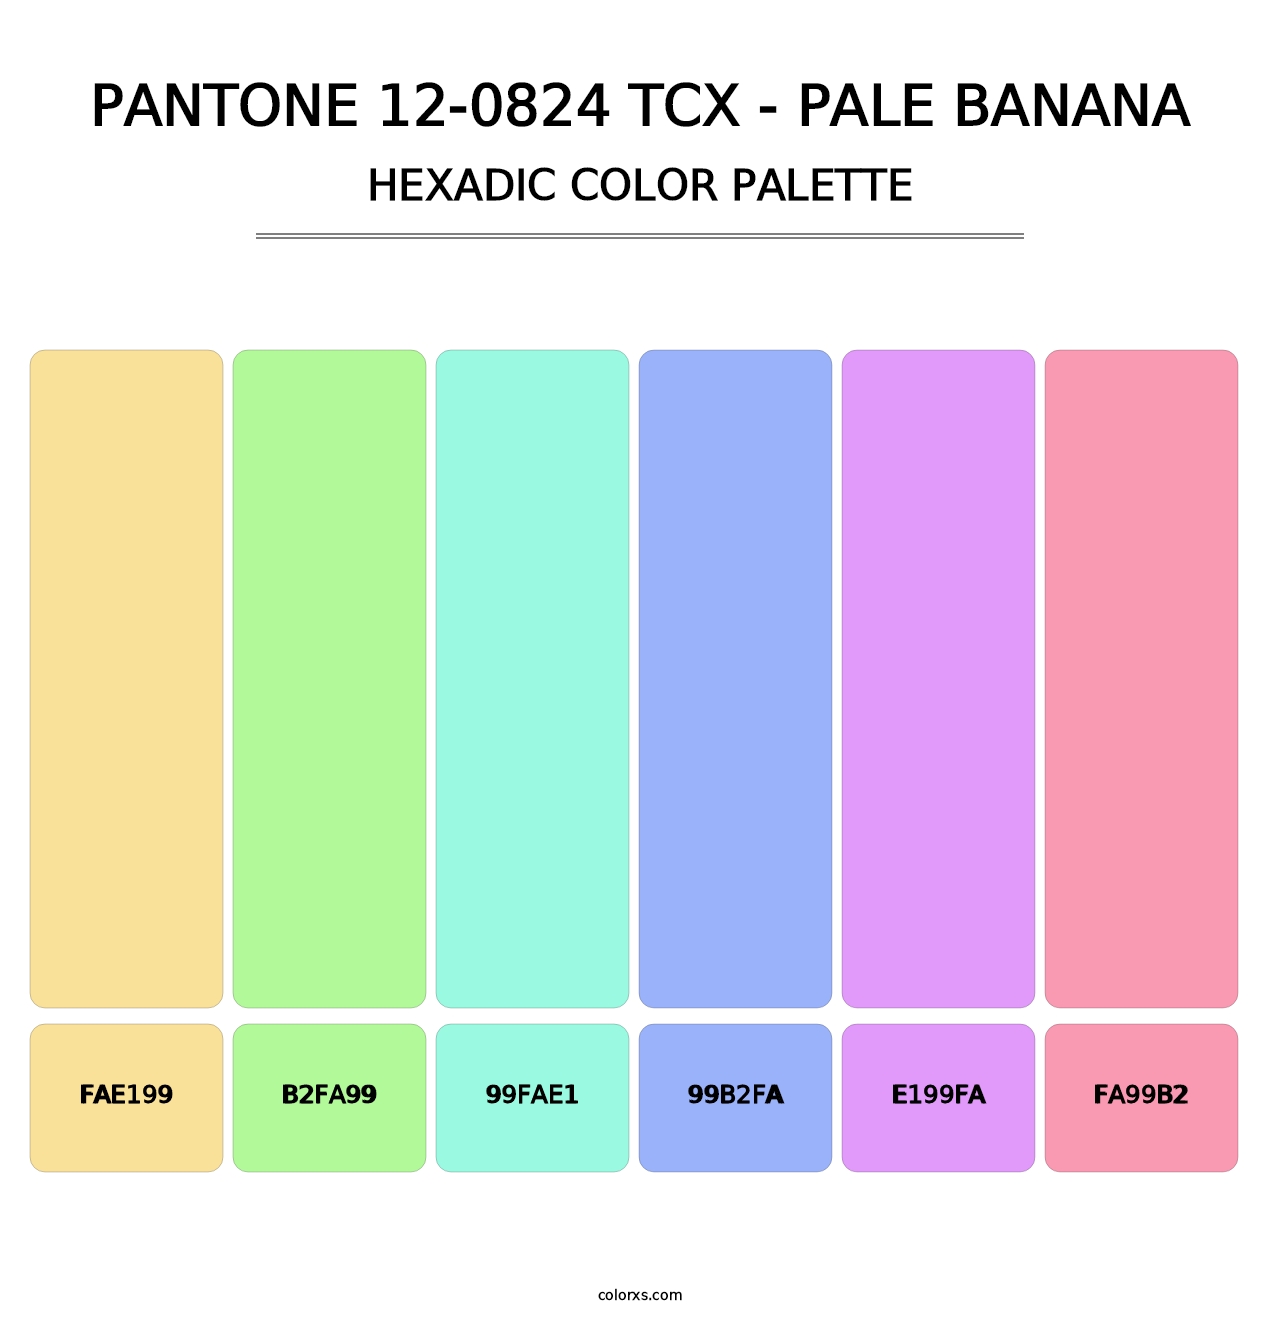 PANTONE 12-0824 TCX - Pale Banana - Hexadic Color Palette